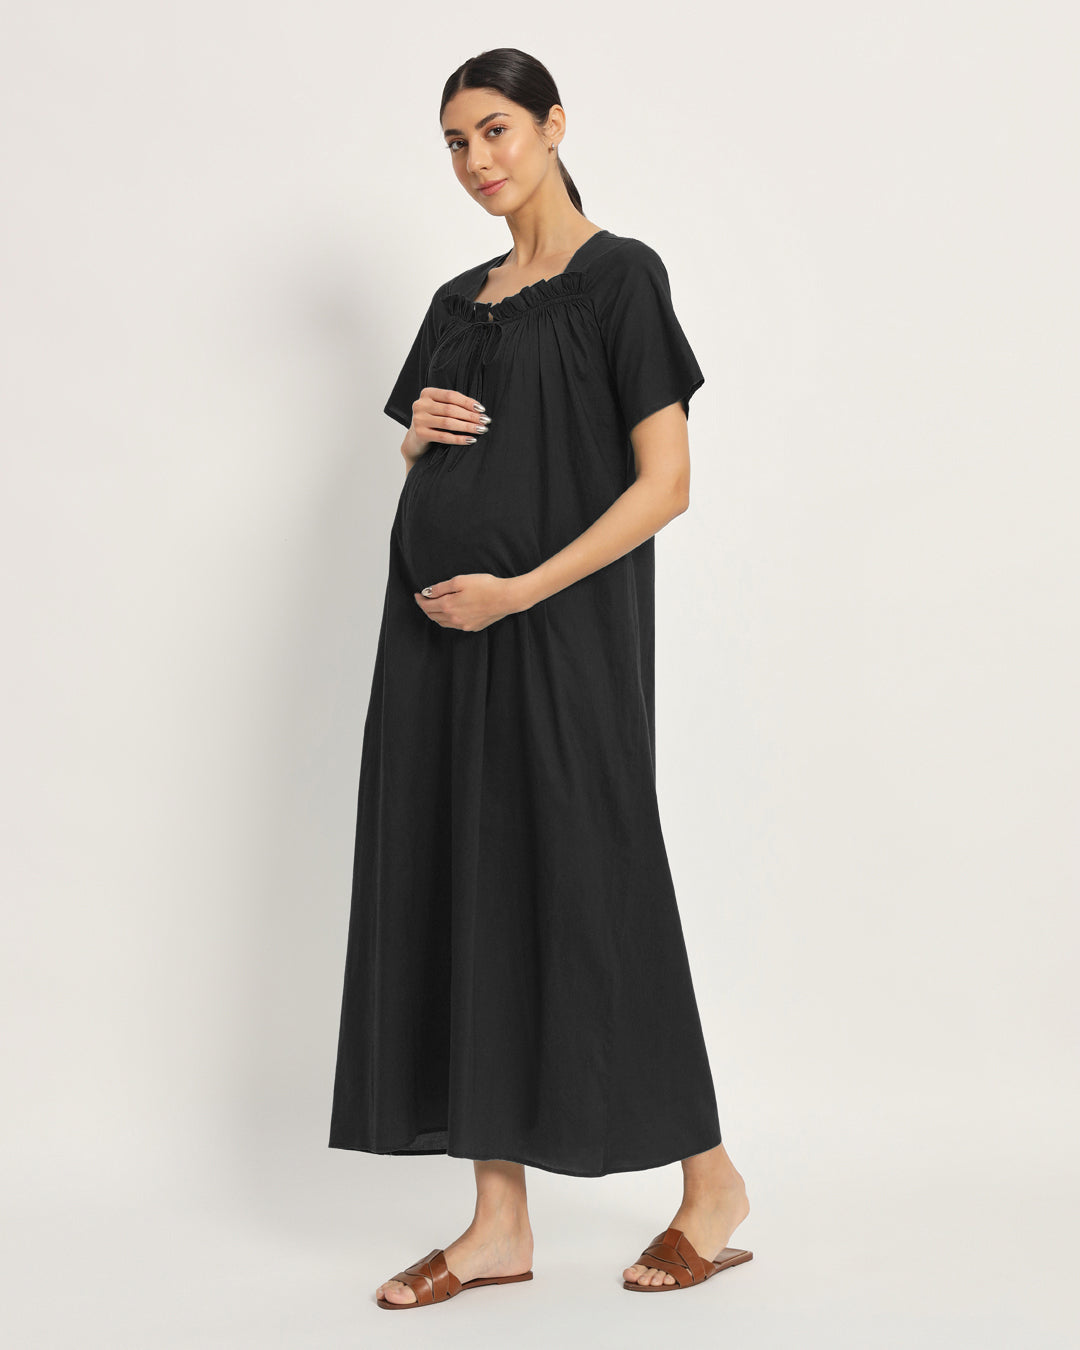 Combo: Black & Sage Green Nurture N' Shine Maternity & Nursing Dress